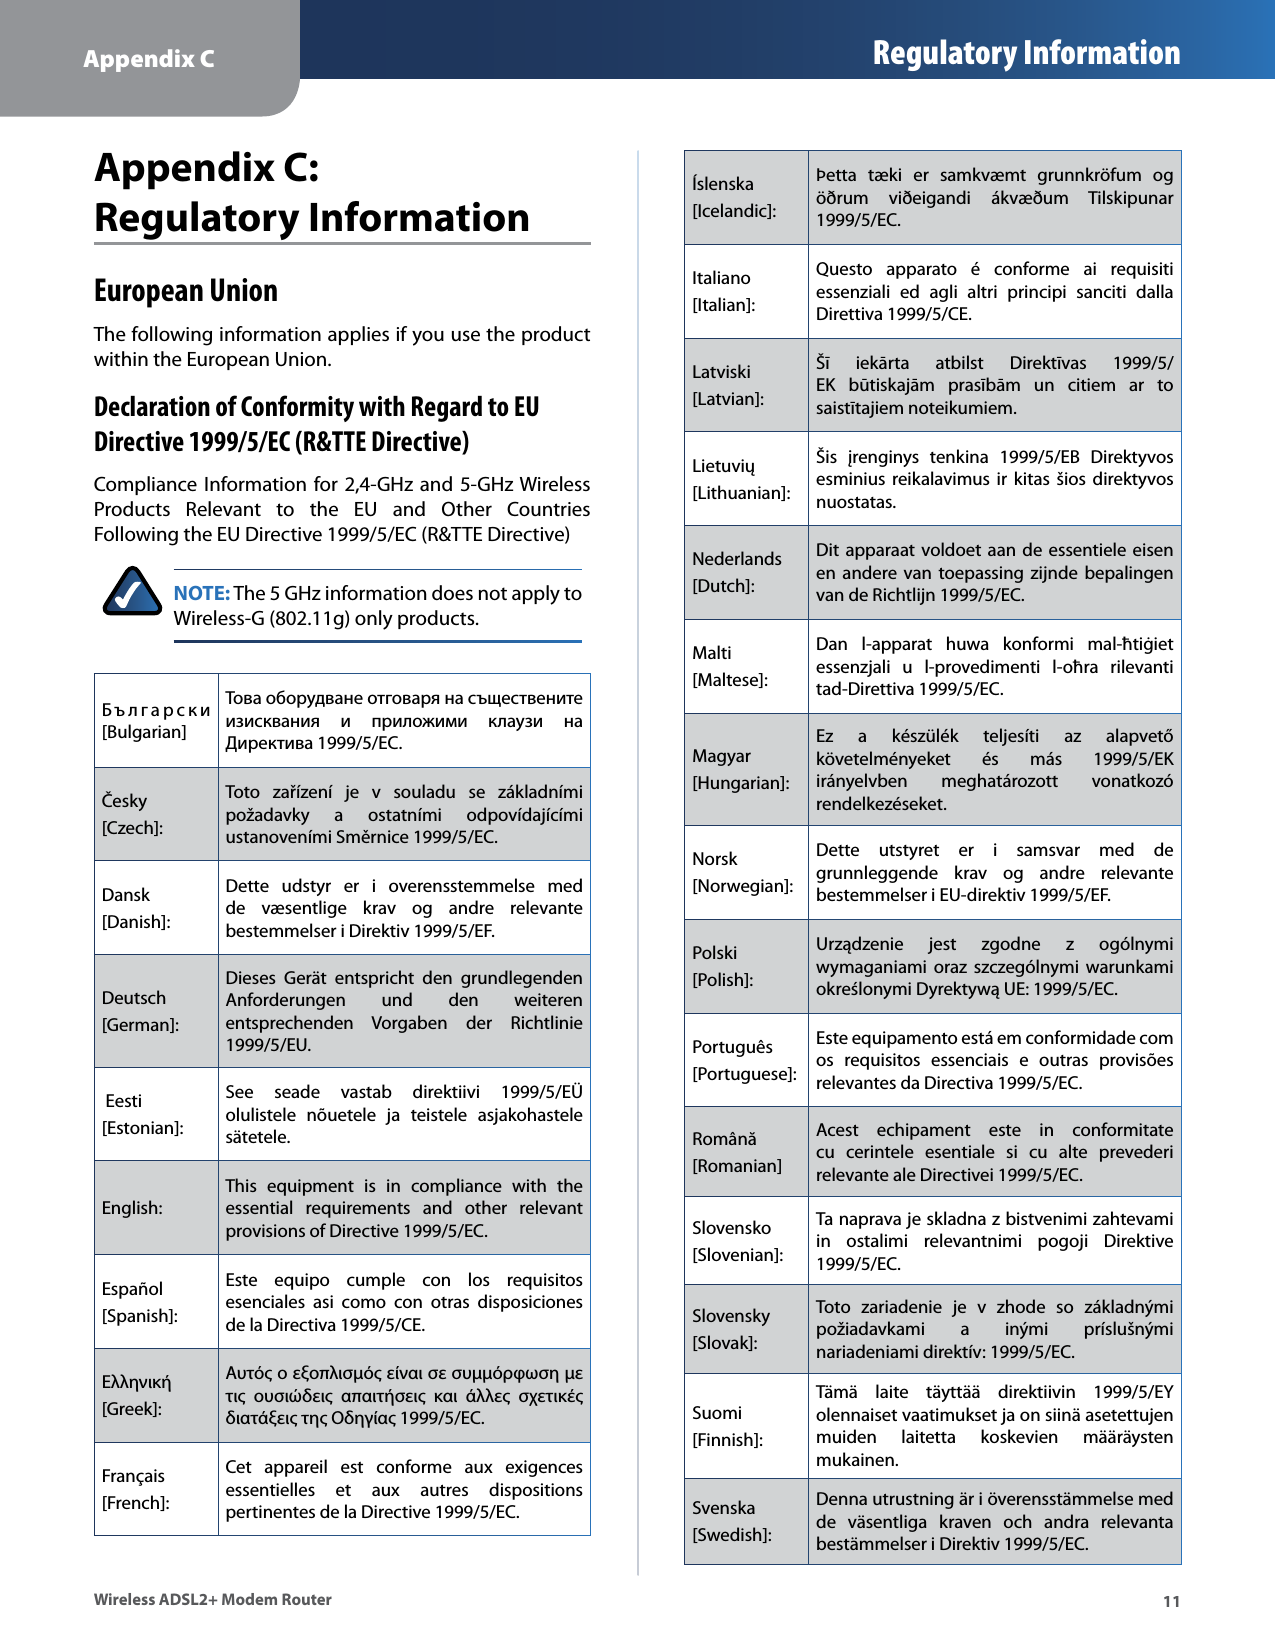 Appendix C Regulatory Information11Wireless ADSL2+ Modem RouterAppendix C:  Regulatory InformationEuropean UnionThe following information applies if you use the product within the European Union.Declaration of Conformity with Regard to EU Directive 1999/5/EC (R&amp;TTE Directive) Compliance Information for 2,4-GHz and 5-GHz Wireless Products  Relevant  to  the  EU  and  Other  Countries Following the EU Directive 1999/5/EC (R&amp;TTE Directive)NOTE: The 5 GHz information does not apply to Wireless-G (802.11g) only products.Бъ л г а р с к и [Bulgarian]Това оборудване отговаря на съществените изисквания  и  приложими  клаузи  на Директива 1999/5/ЕС.Česky [Czech]:Toto  zařízení  je  v  souladu  se  základními požadavky  a  ostatními  odpovídajícími ustanoveními Směrnice 1999/5/EC.Dansk [Danish]:Dette  udstyr  er  i  overensstemmelse  med de  væsentlige  krav  og  andre  relevante bestemmelser i Direktiv 1999/5/EF.Deutsch [German]:Dieses  Gerät  entspricht  den  grundlegenden Anforderungen  und  den  weiteren entsprechenden  Vorgaben  der  Richtlinie 1999/5/EU. Eesti [Estonian]:See  seade  vastab  direktiivi  1999/5/EÜ olulistele  nõuetele  ja  teistele  asjakohastele sätetele.English:This  equipment  is  in  compliance  with  the essential  requirements  and  other  relevant provisions of Directive 1999/5/EC.Español [Spanish]:Este  equipo  cumple  con  los  requisitos esenciales  asi  como  con  otras  disposiciones de la Directiva 1999/5/CE.Ελληνική [Greek]:Αυτός ο εξοπλισµός είναι σε συµµόρφωση µε τις  ουσιώδεις  απαιτήσεις  και  άλλες  σχετικές διατάξεις της Οδηγίας 1999/5/EC.Français [French]:Cet  appareil  est  conforme  aux  exigences essentielles  et  aux  autres  dispositions pertinentes de la Directive 1999/5/EC.Íslenska [Icelandic]:Þetta  tæki  er  samkvæmt  grunnkröfum  og öðrum  viðeigandi  ákvæðum  Tilskipunar 1999/5/EC.Italiano [Italian]:Questo  apparato  é  conforme  ai  requisiti essenziali  ed  agli  altri  principi  sanciti  dalla Direttiva 1999/5/CE.Latviski [Latvian]:Šī  iekārta  atbilst  Direktīvas  1999/5/EK  būtiskajām  prasībām  un  citiem  ar  to saistītajiem noteikumiem.Lietuvių [Lithuanian]:Šis  įrenginys  tenkina  1999/5/EB  Direktyvos esminius  reikalavimus ir  kitas  šios  direktyvos nuostatas.Nederlands[Dutch]:Dit apparaat voldoet  aan  de  essentiele  eisen en  andere  van  toepassing  zijnde  bepalingen van de Richtlijn 1999/5/EC.Malti [Maltese]:Dan  l-apparat  huwa  konformi  mal-ħtiġiet essenzjali  u  l-provedimenti  l-oħra  rilevanti tad-Direttiva 1999/5/EC.Magyar[Hungarian]:Ez  a  készülék  teljesíti  az  alapvető követelményeket  és  más  1999/5/EK irányelvben  meghatározott  vonatkozó rendelkezéseket.Norsk[Norwegian]:Dette  utstyret  er  i  samsvar  med  de grunnleggende  krav  og  andre  relevante bestemmelser i EU-direktiv 1999/5/EF.Polski [Polish]:Urządzenie  jest  zgodne  z  ogólnymi wymaganiami  oraz  szczególnymi warunkami określonymi Dyrektywą UE: 1999/5/EC.Português [Portuguese]:Este equipamento está em conformidade com os  requisitos  essenciais  e  outras  provisões relevantes da Directiva 1999/5/EC.Română [Romanian]Acest  echipament  este  in  conformitate cu  cerintele  esentiale  si  cu  alte  prevederi relevante ale Directivei 1999/5/EC.Slovensko [Slovenian]:Ta naprava je skladna z bistvenimi zahtevami in  ostalimi  relevantnimi  pogoji  Direktive 1999/5/EC.Slovensky [Slovak]:Toto  zariadenie  je  v  zhode  so  základnými požiadavkami  a  inými  príslušnými nariadeniami direktív: 1999/5/EC. Suomi [Finnish]:Tämä  laite  täyttää  direktiivin  1999/5/EY olennaiset vaatimukset ja on siinä asetettujen muiden  laitetta  koskevien  määräysten mukainen.Svenska [Swedish]:Denna utrustning är i överensstämmelse med de  väsentliga  kraven  och  andra  relevanta bestämmelser i Direktiv 1999/5/EC.